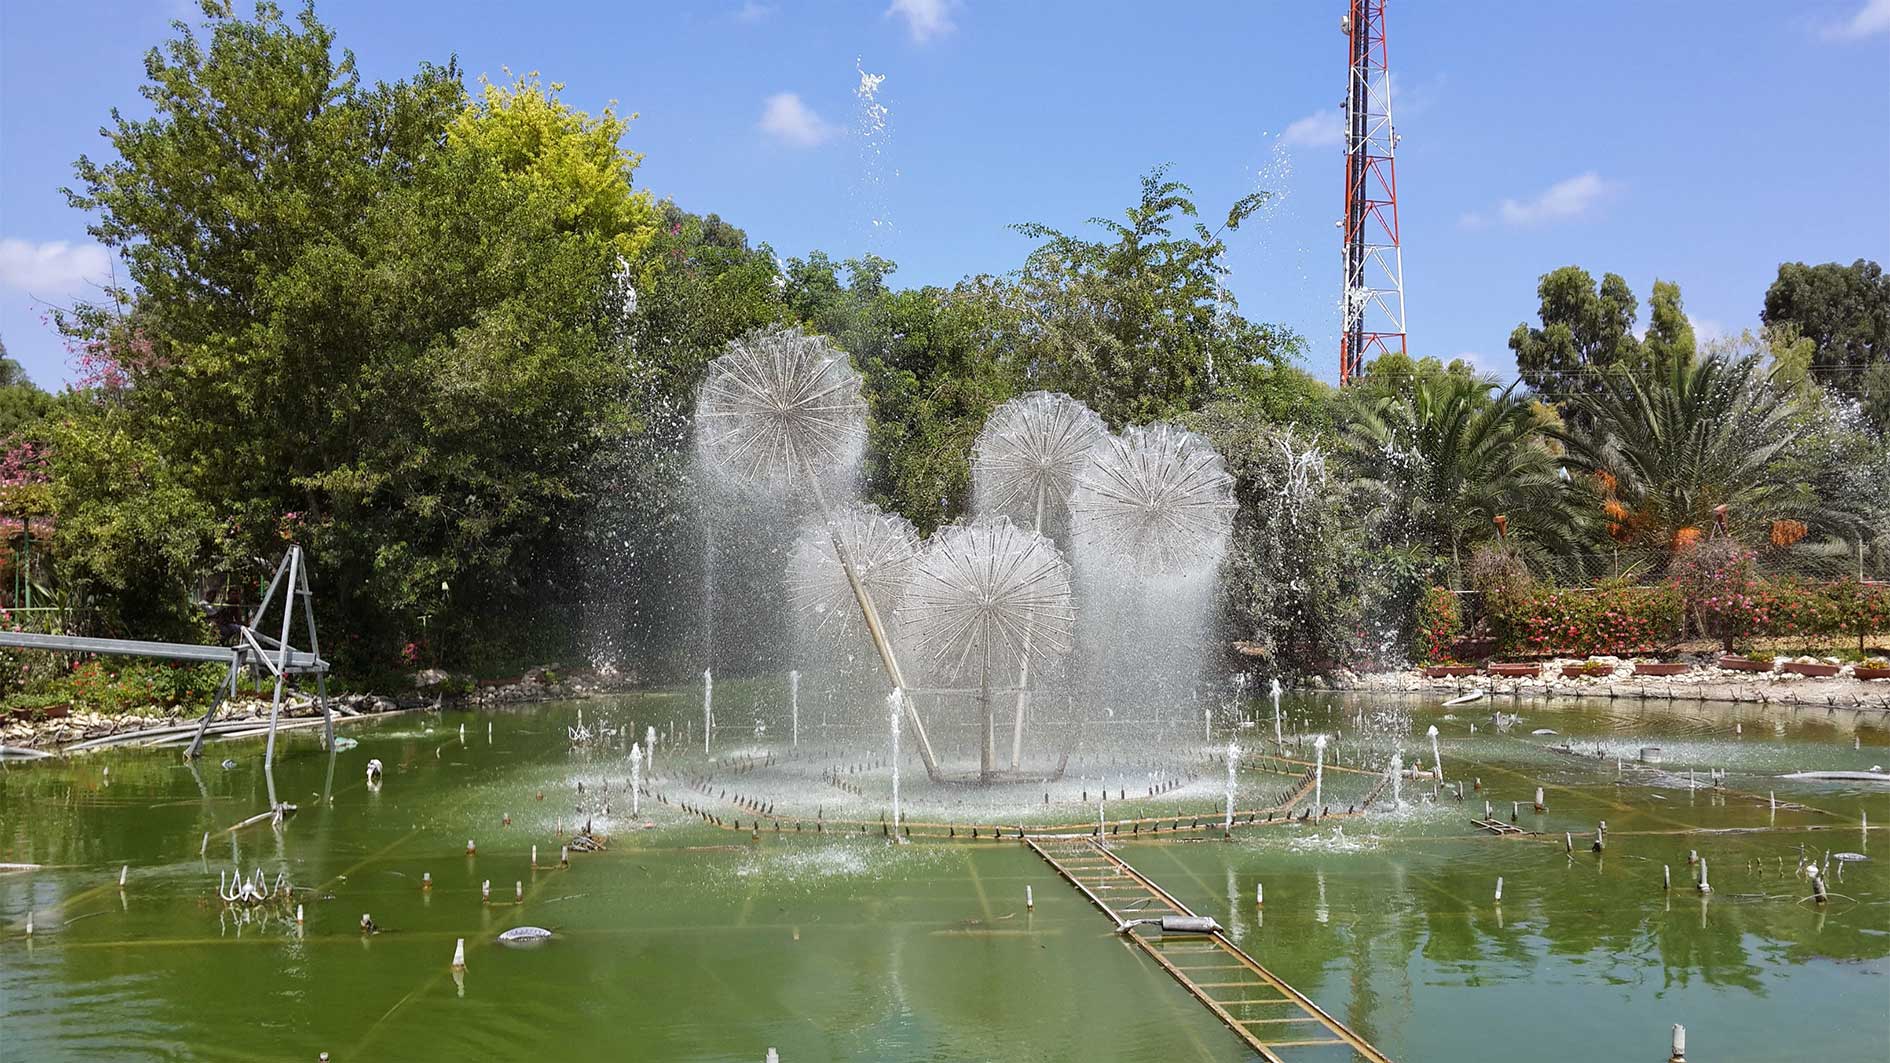 Musical fountain in Utopia park